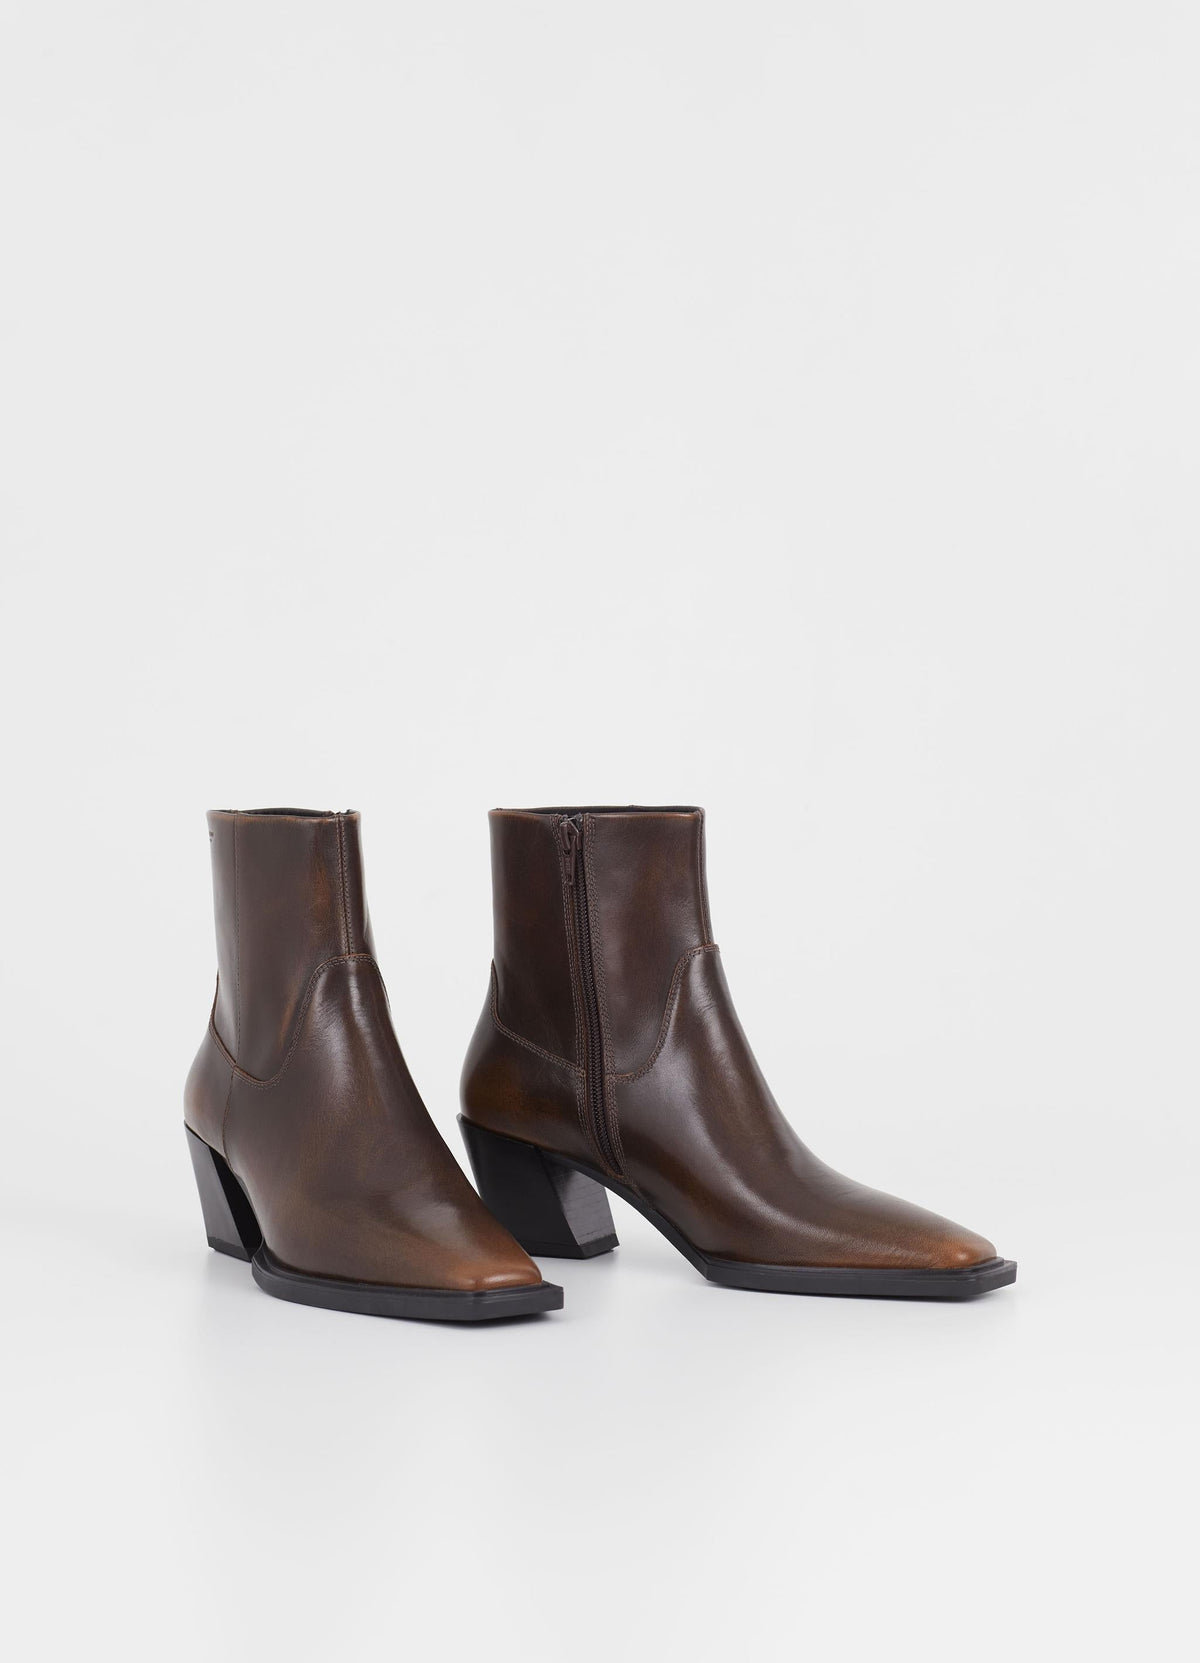 Dark brown western inspired boot with slanted stacked block heel and inside zip fastening